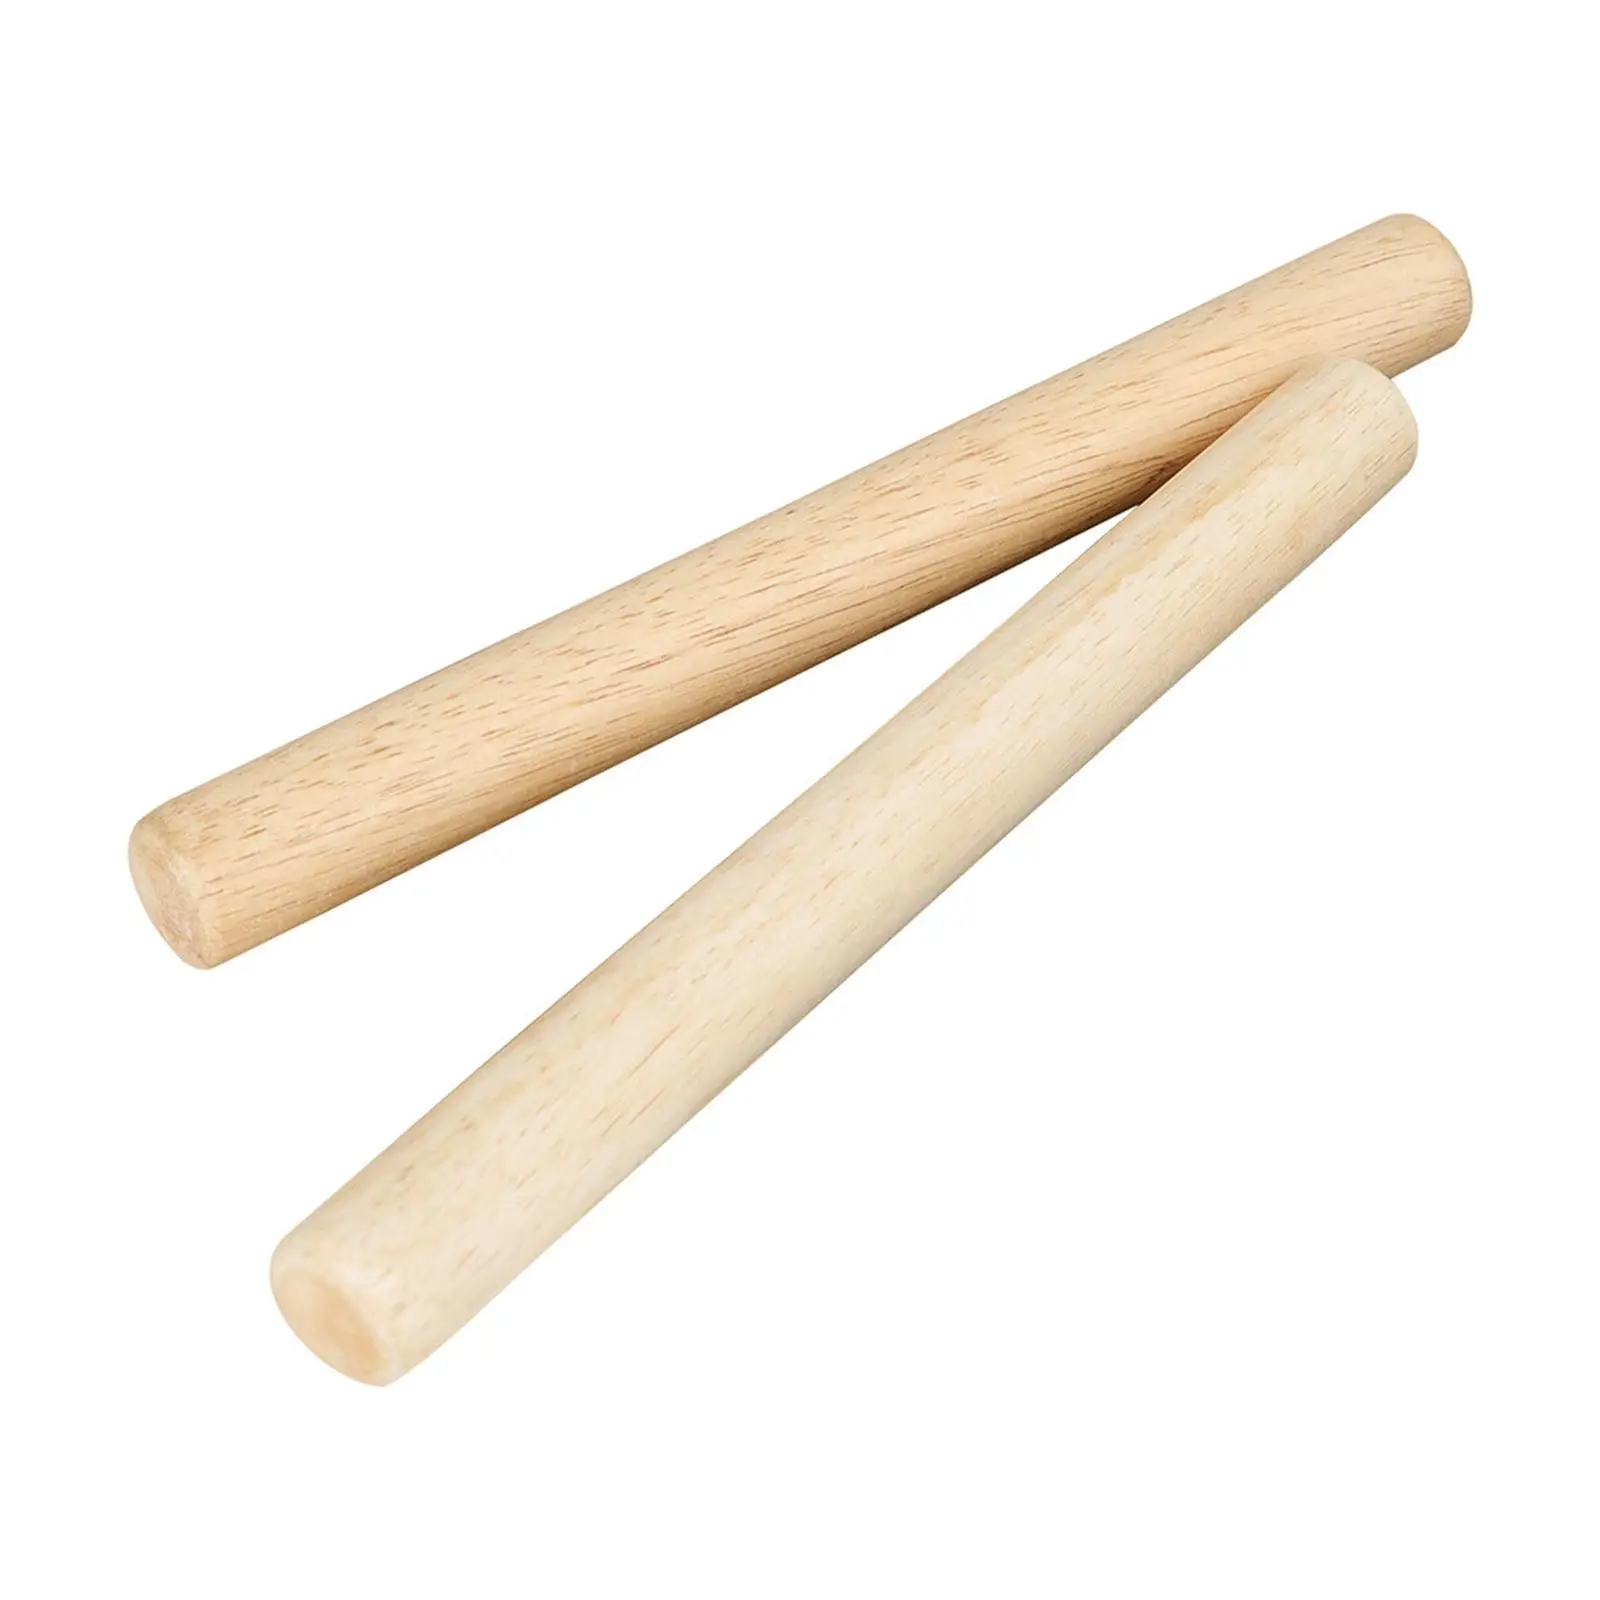 2Pcs Wooden Drum Sticks Musical Toy Preschool Learning Education Toy Drum Sticks for Children